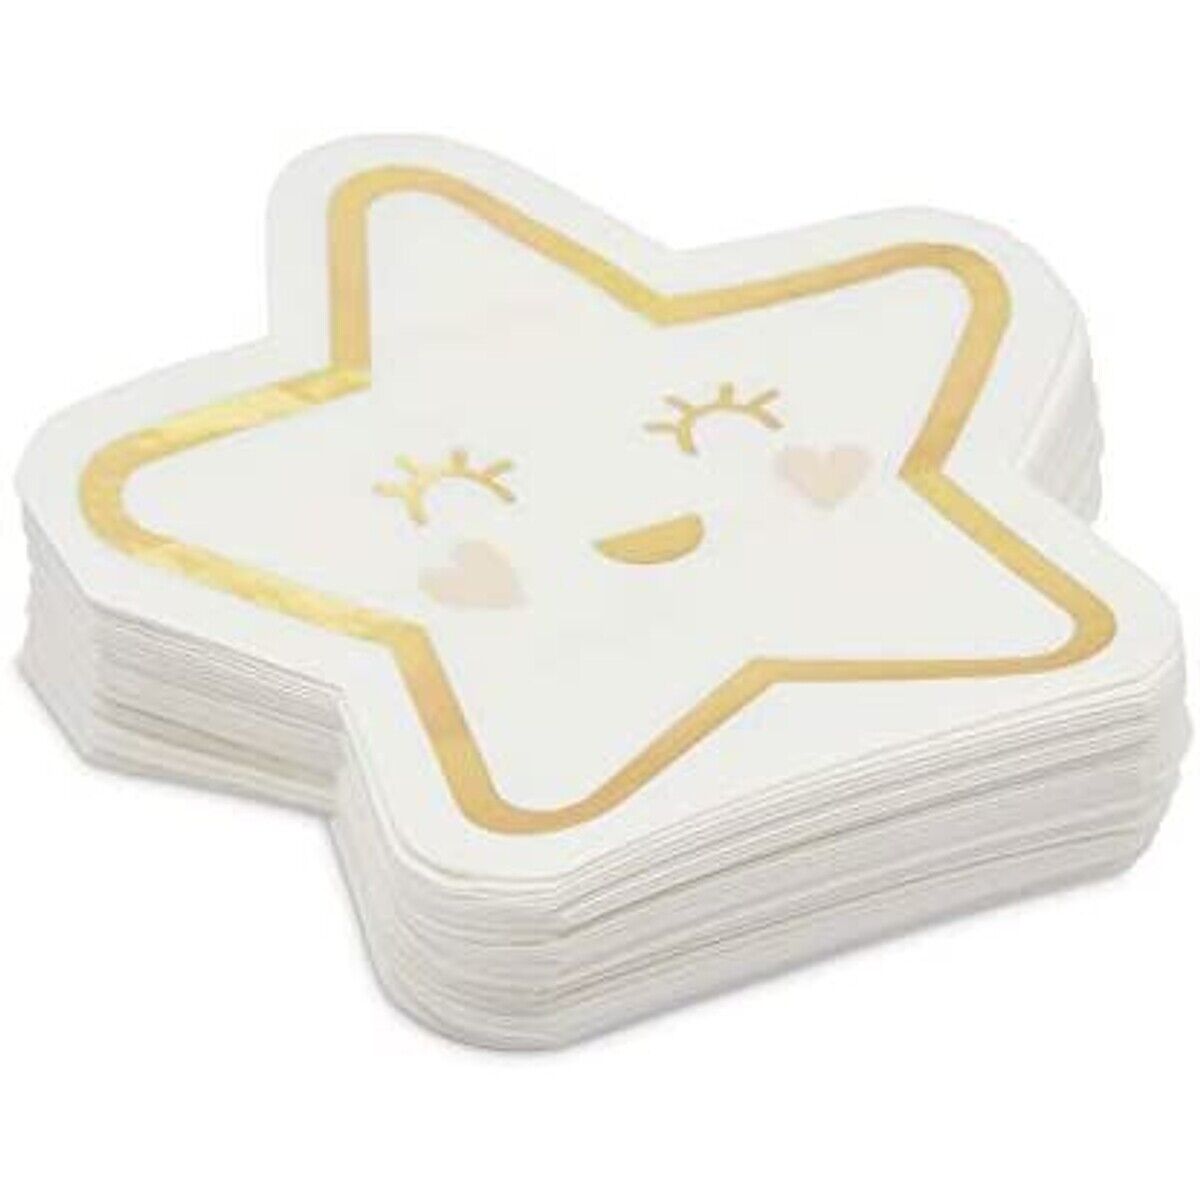 Mini Star Paper Napkins for Baby Shower